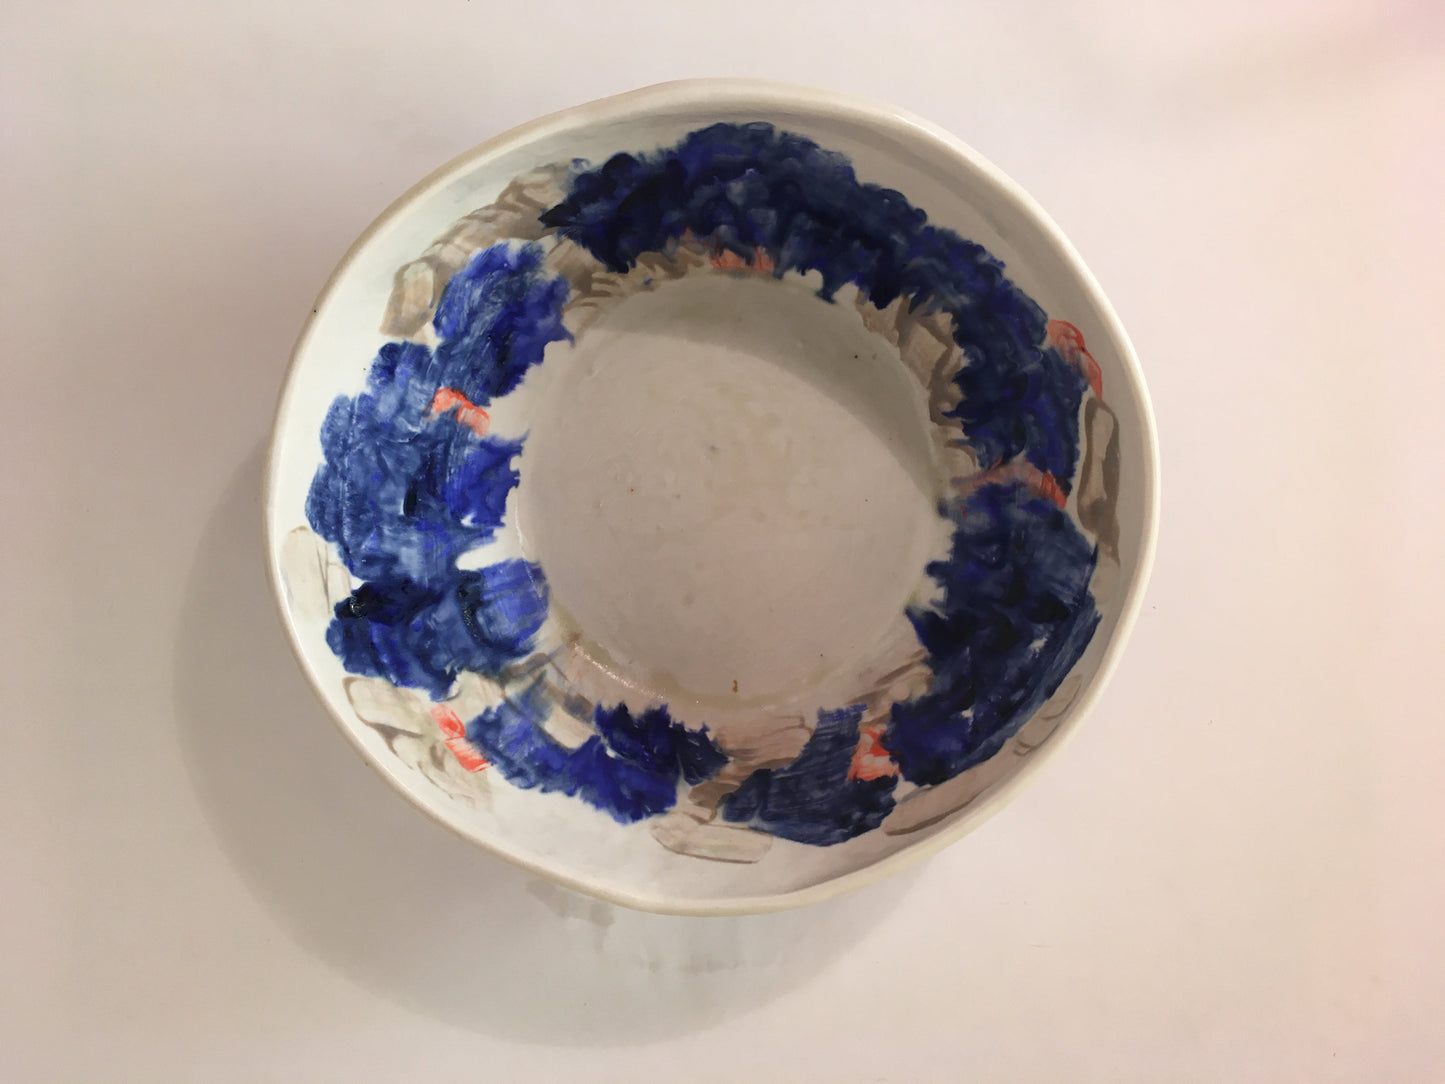 Porcelain Bowl with Grey, Blue, and Orange Marks